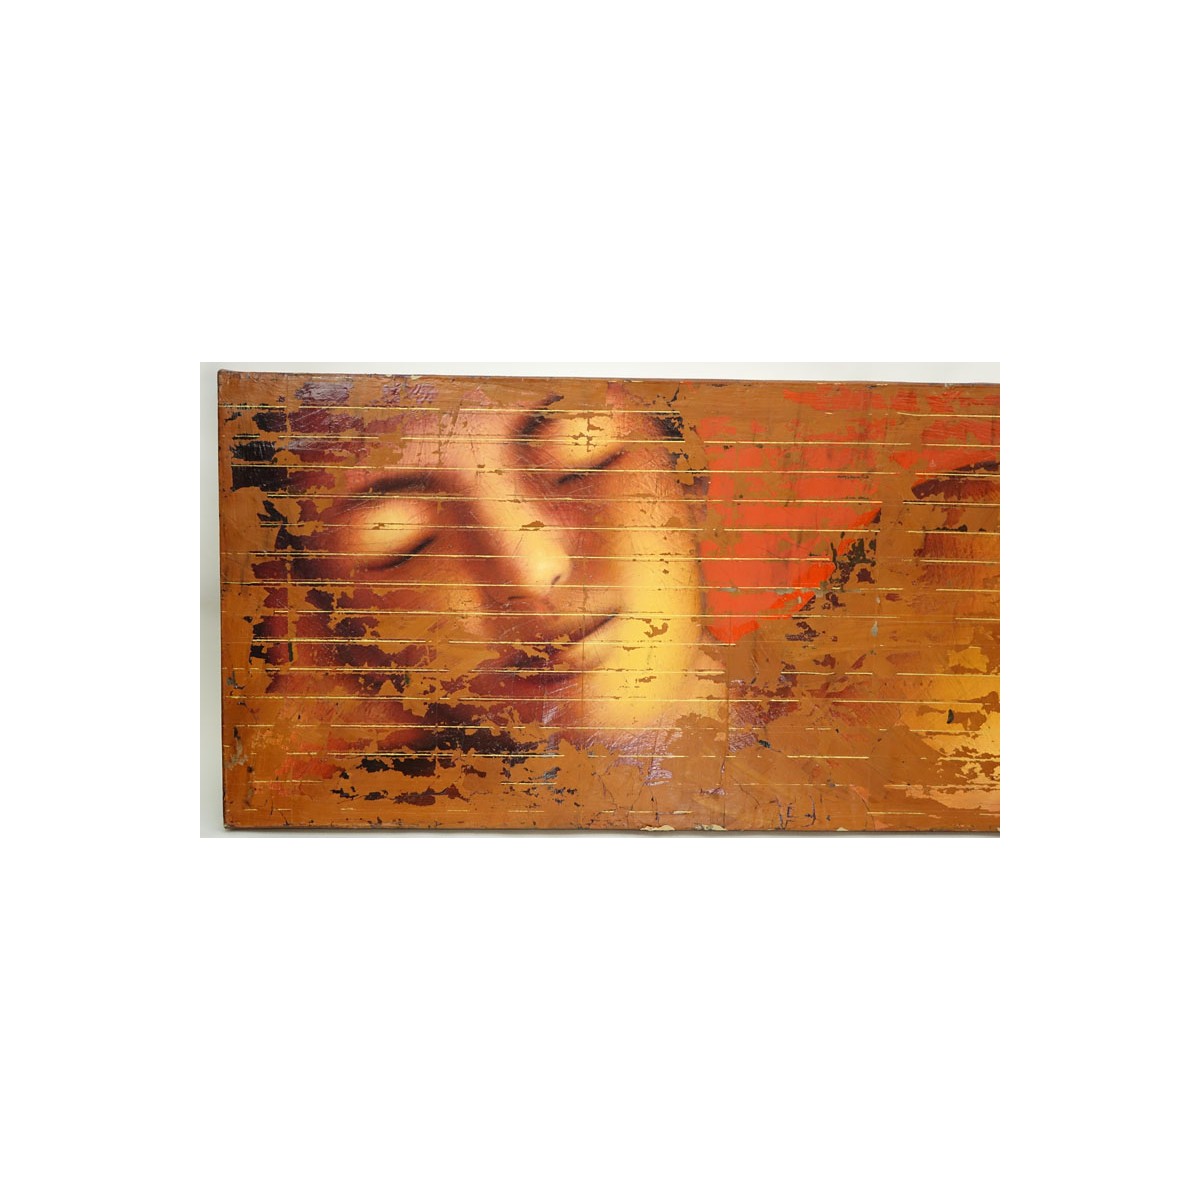 Sandra Sunnyo Lee, American (20th Century) Mixed Media On Canvas Triptych "Reclining Buddha" Unsign